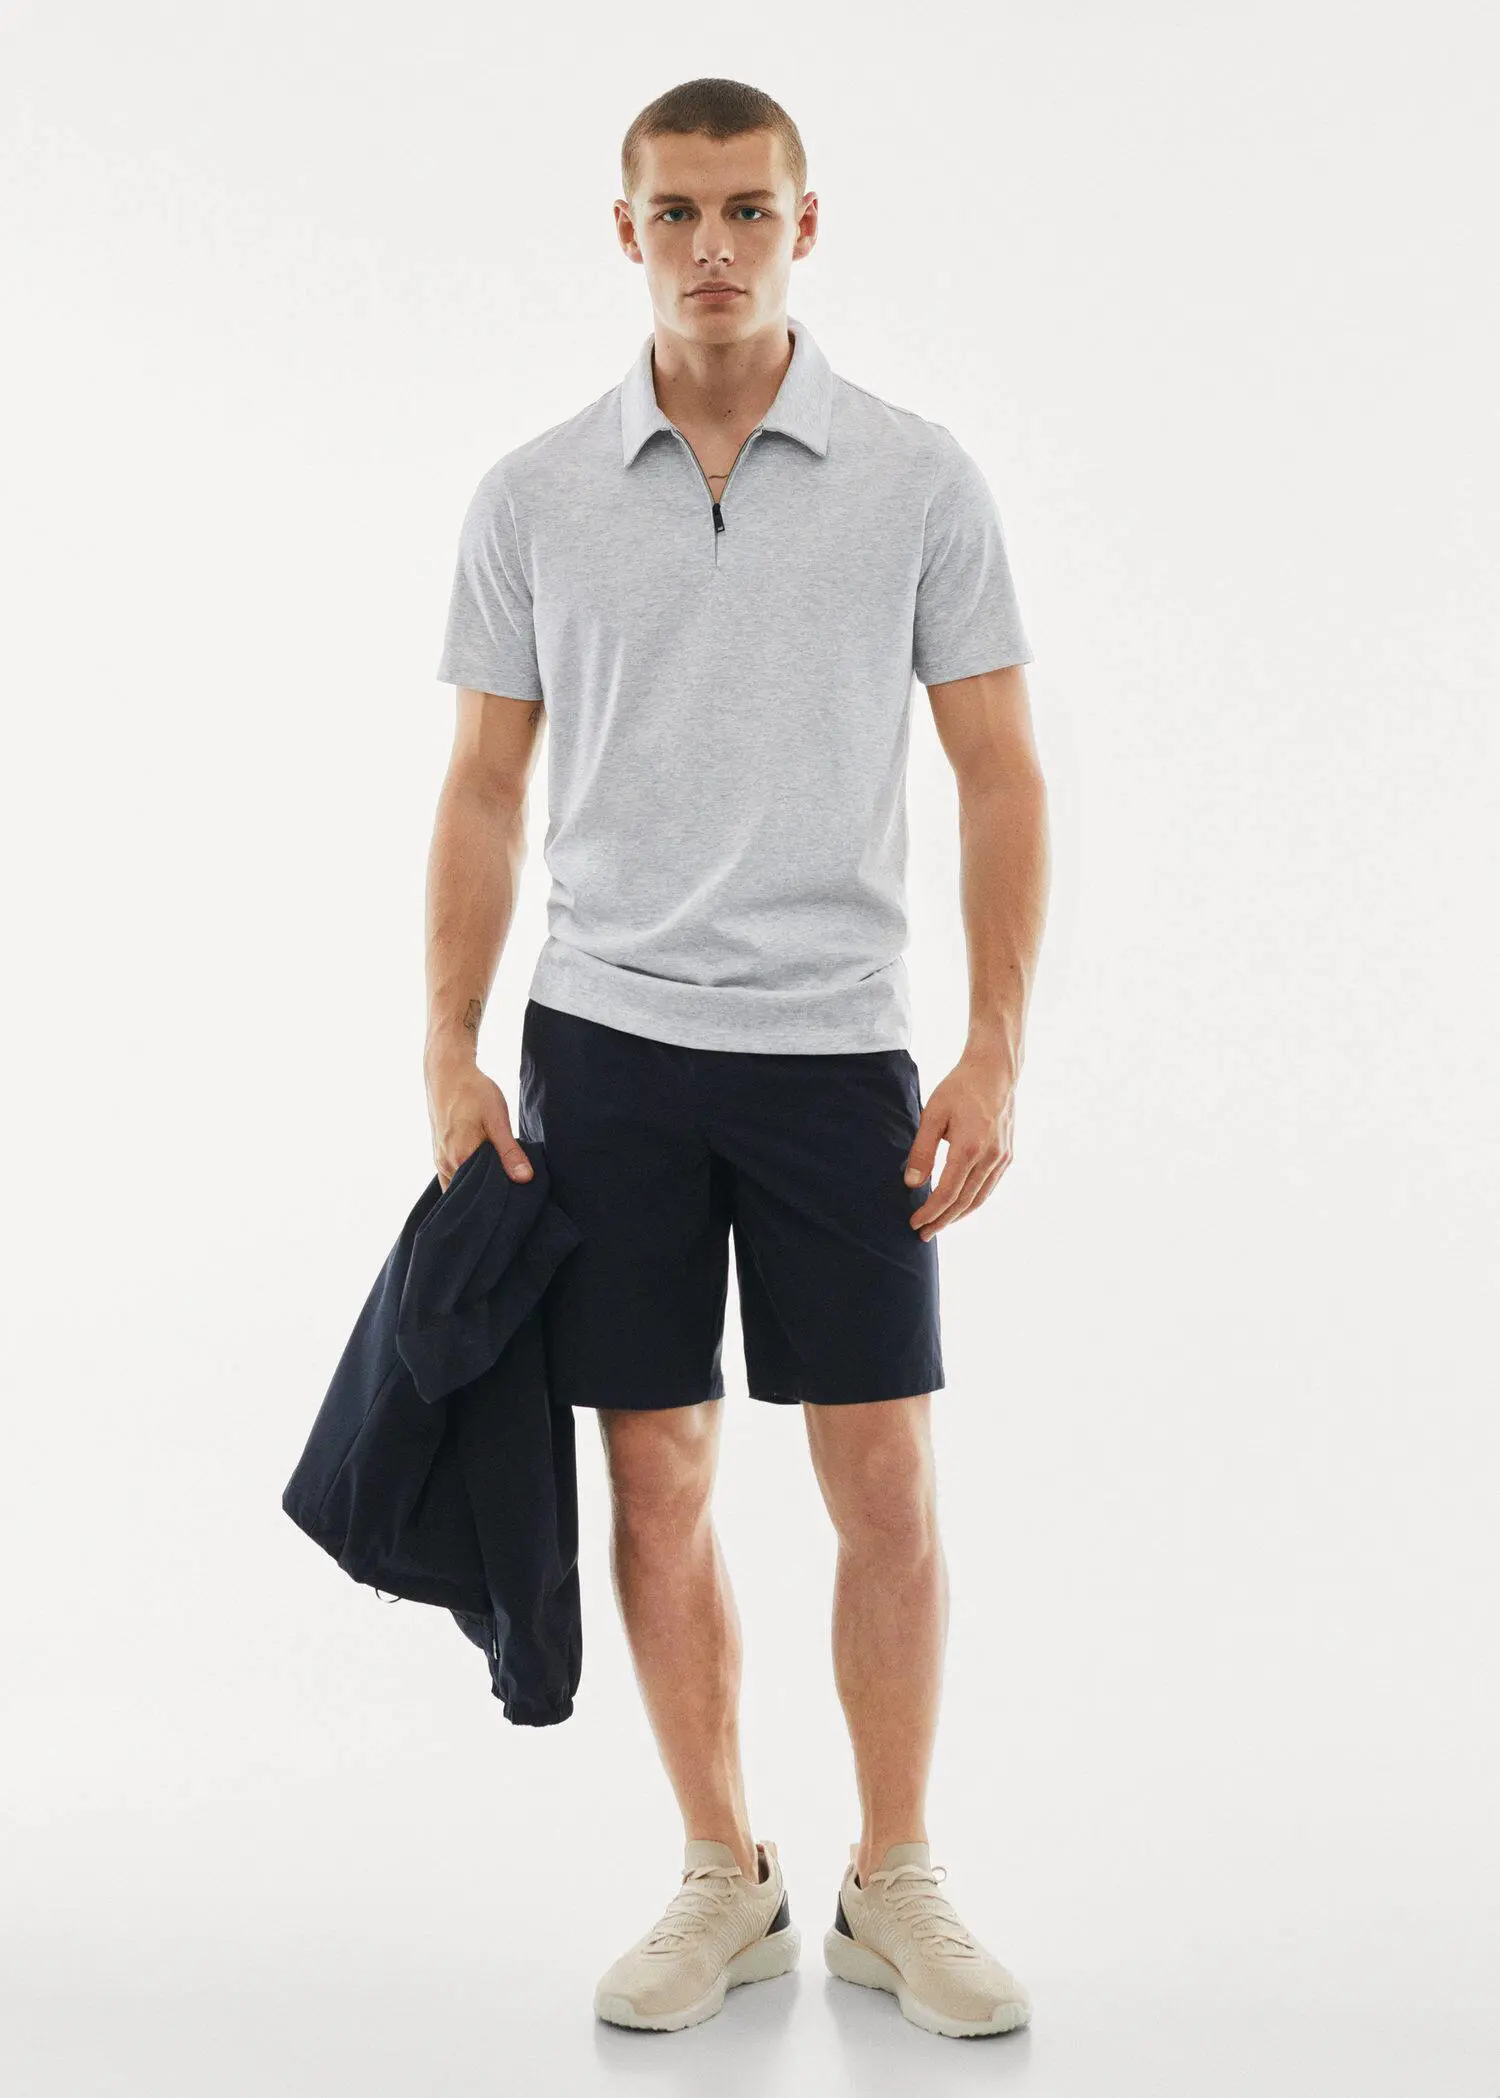 Mango Zip cotton polo shirt. a young man in shorts and a polo shirt. 